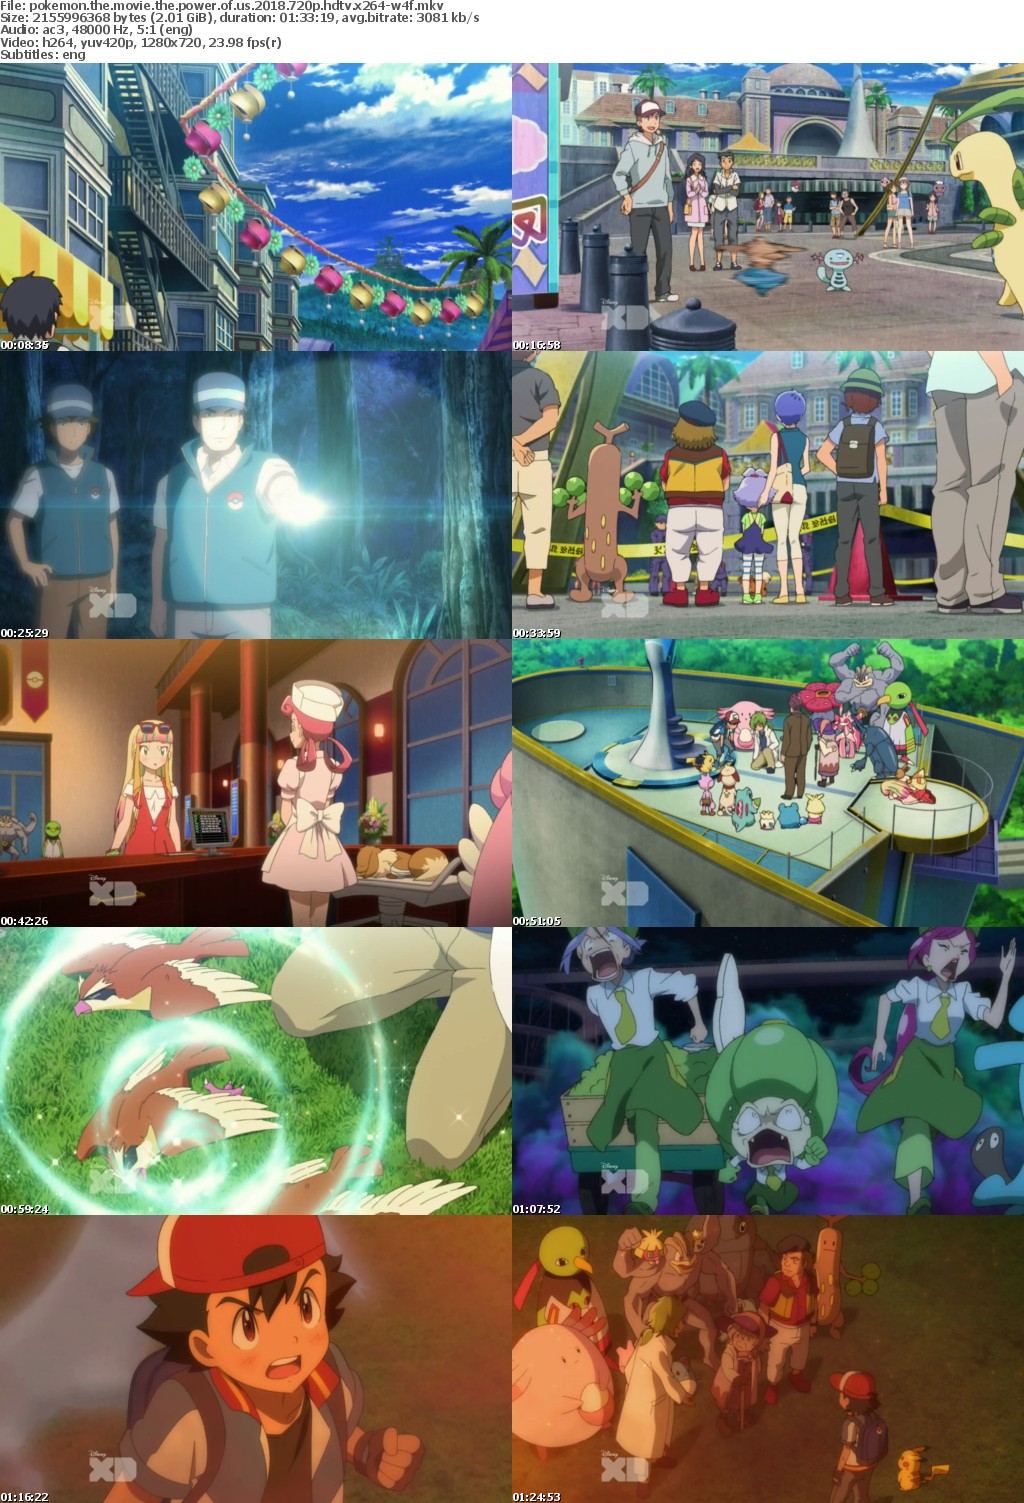 Pokemon The Movie The Power of Us (2018) 720p HDTV x264-W4Frarbg